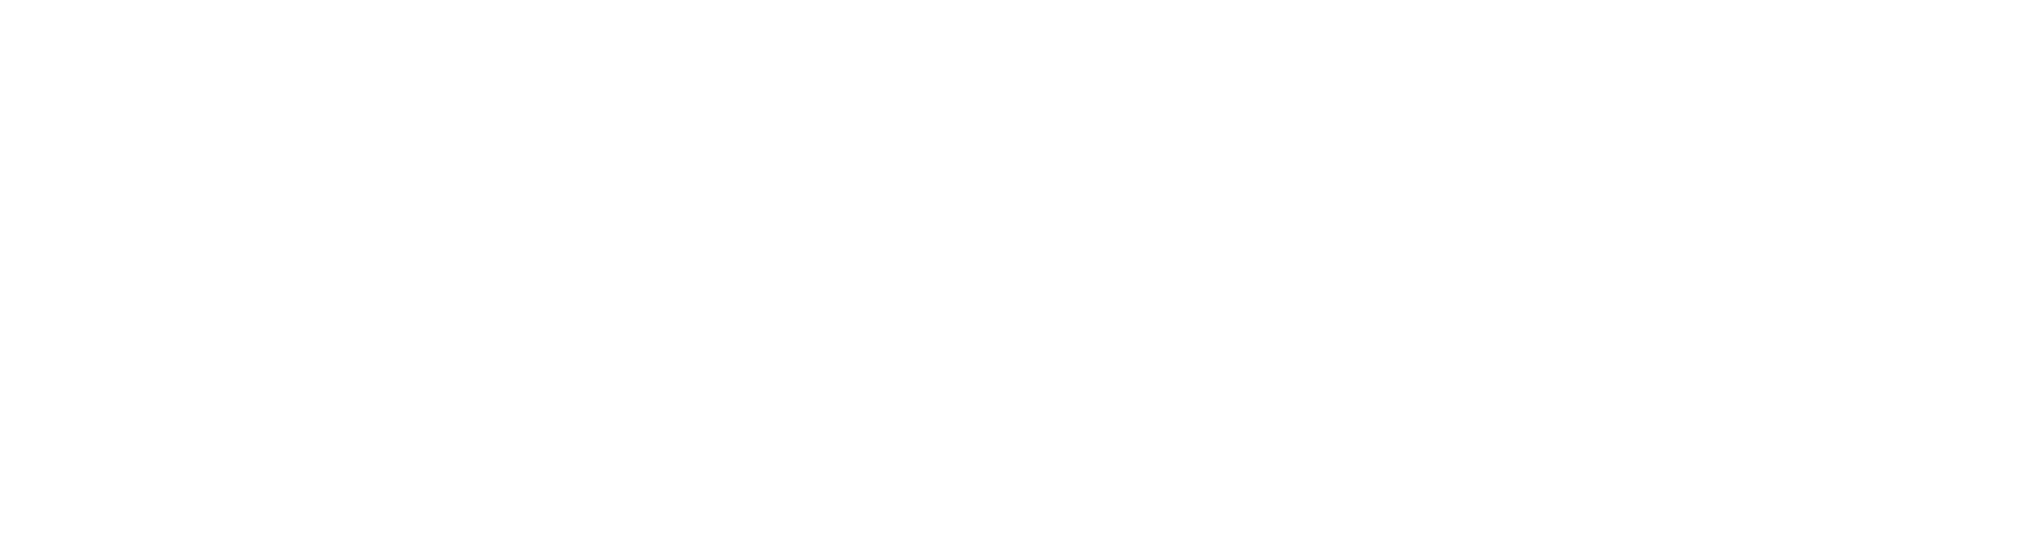 Teknity Corporate